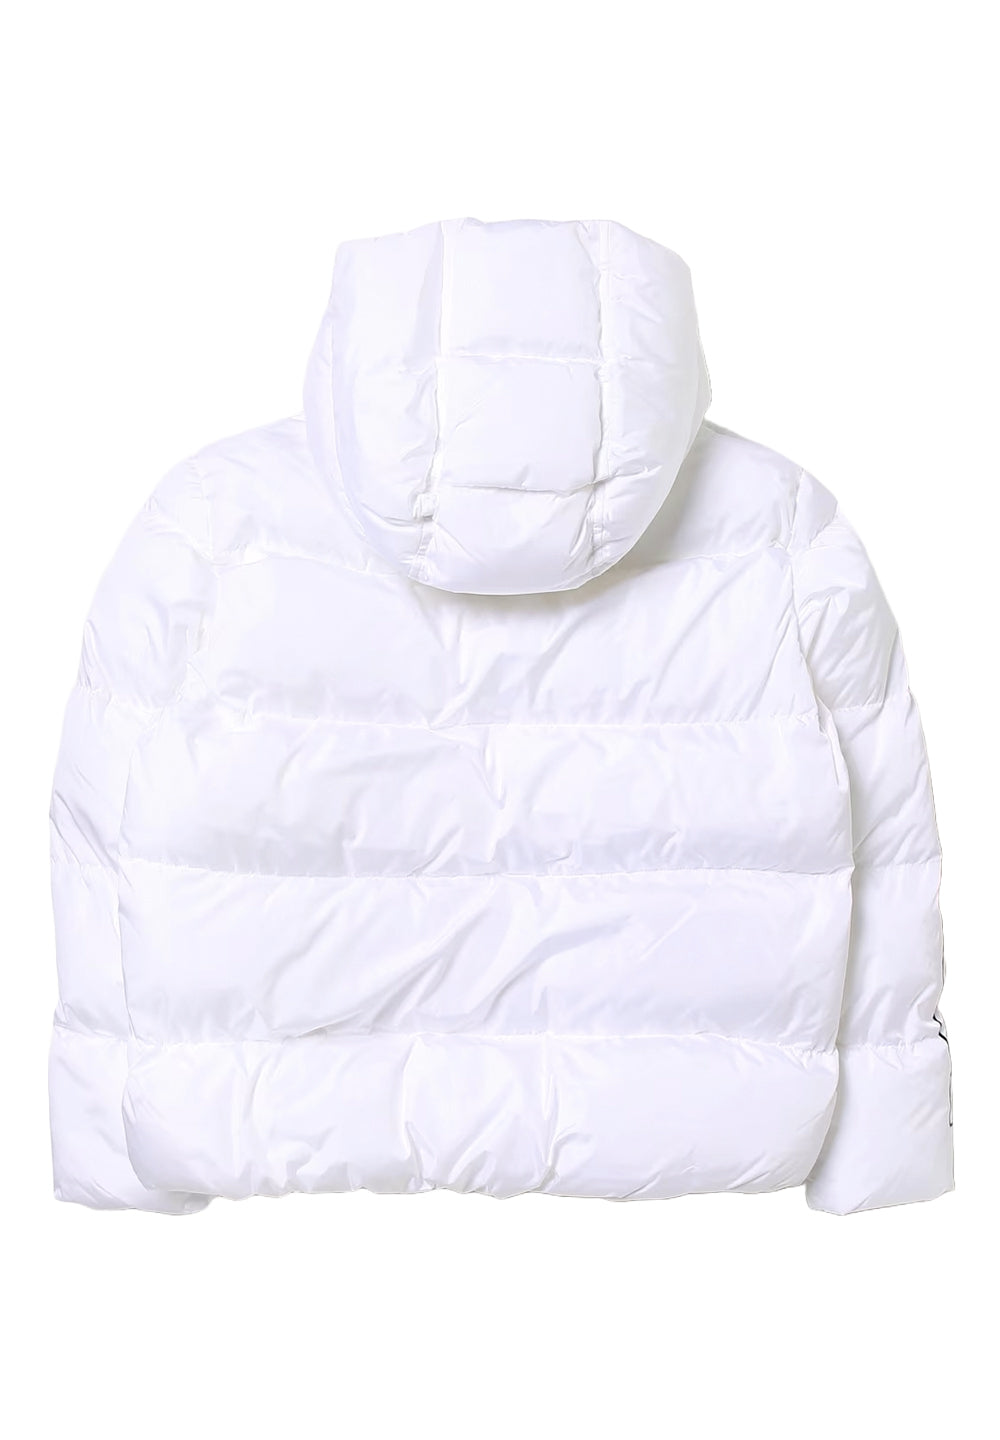 White jacket for boy